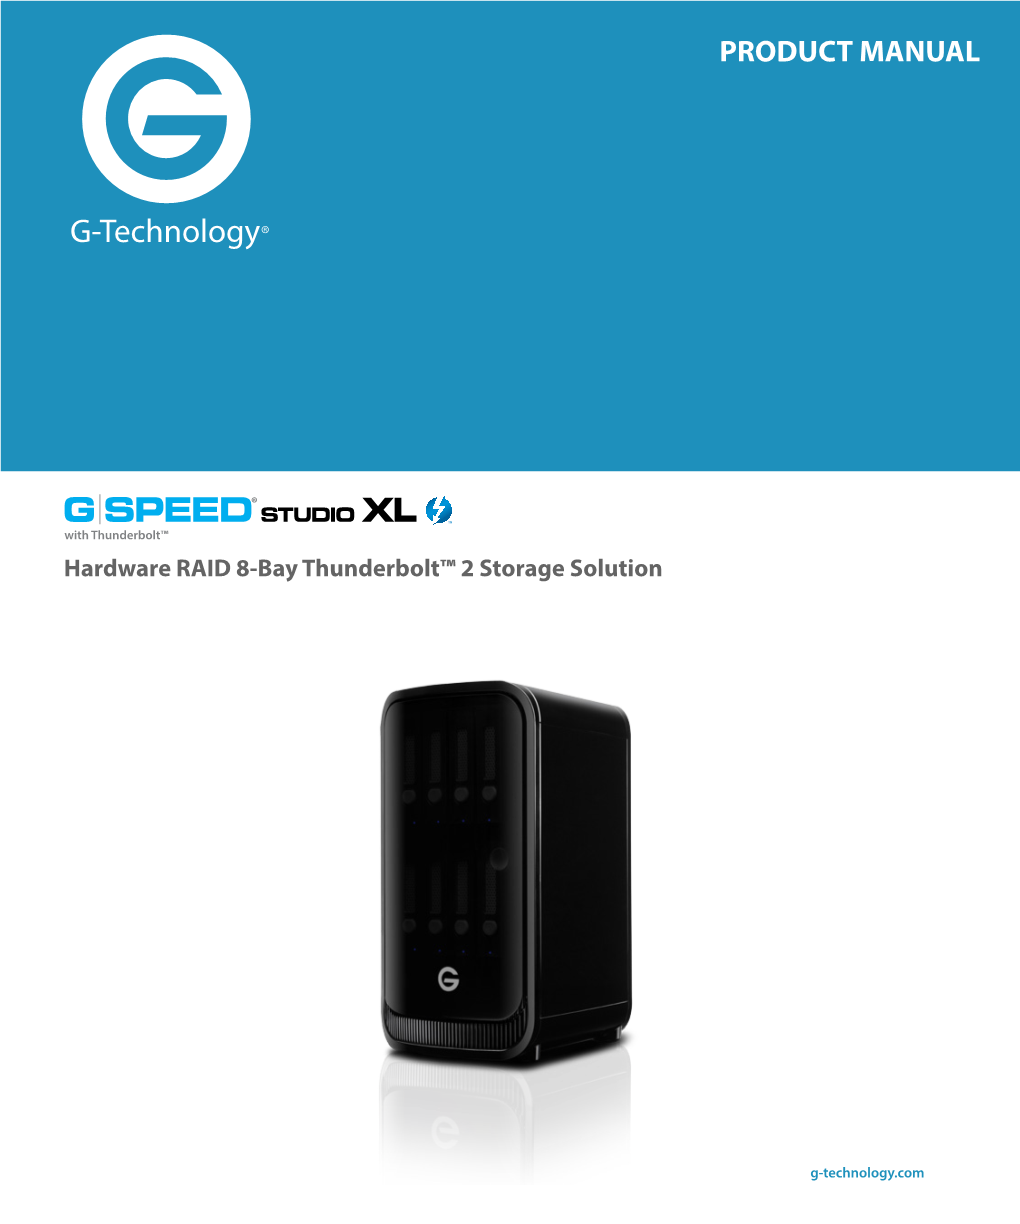 G SPEED STUDIO XL with Thunderbolt™ Hardware RAID 8-Bay Thunderbolt™ 2 Storage Solution